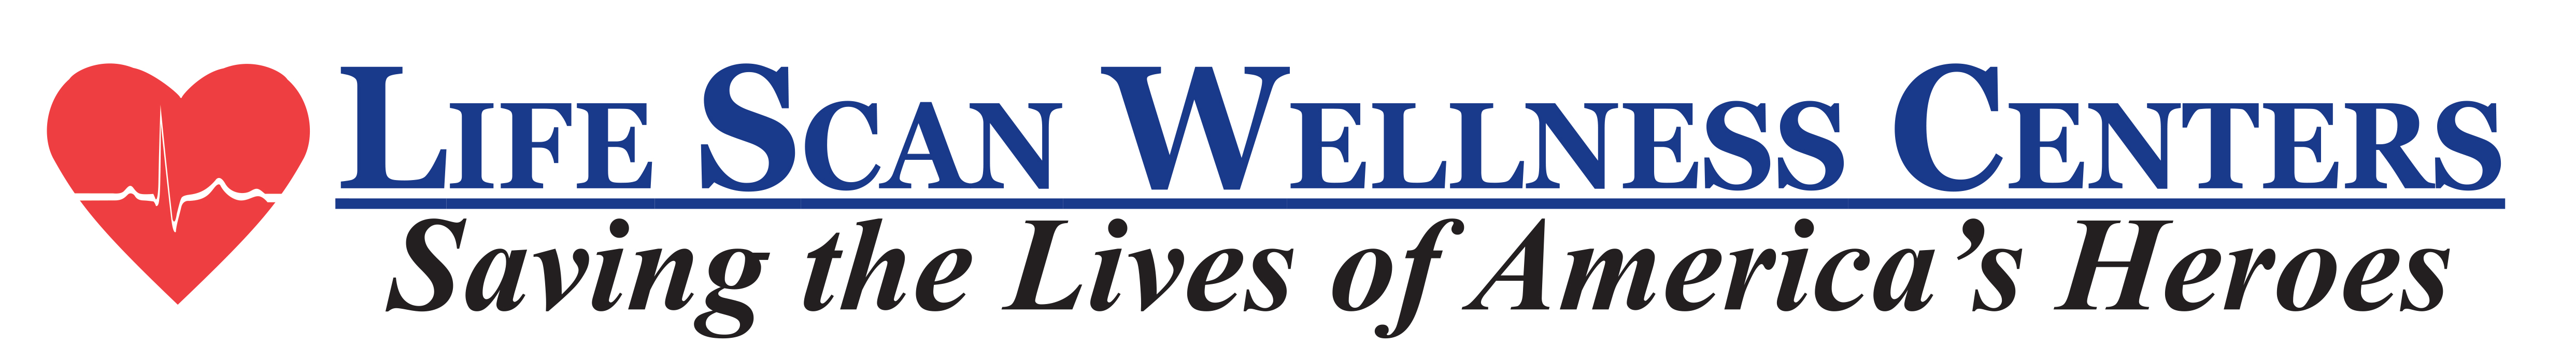 Life Scan Wellness Centers Logo